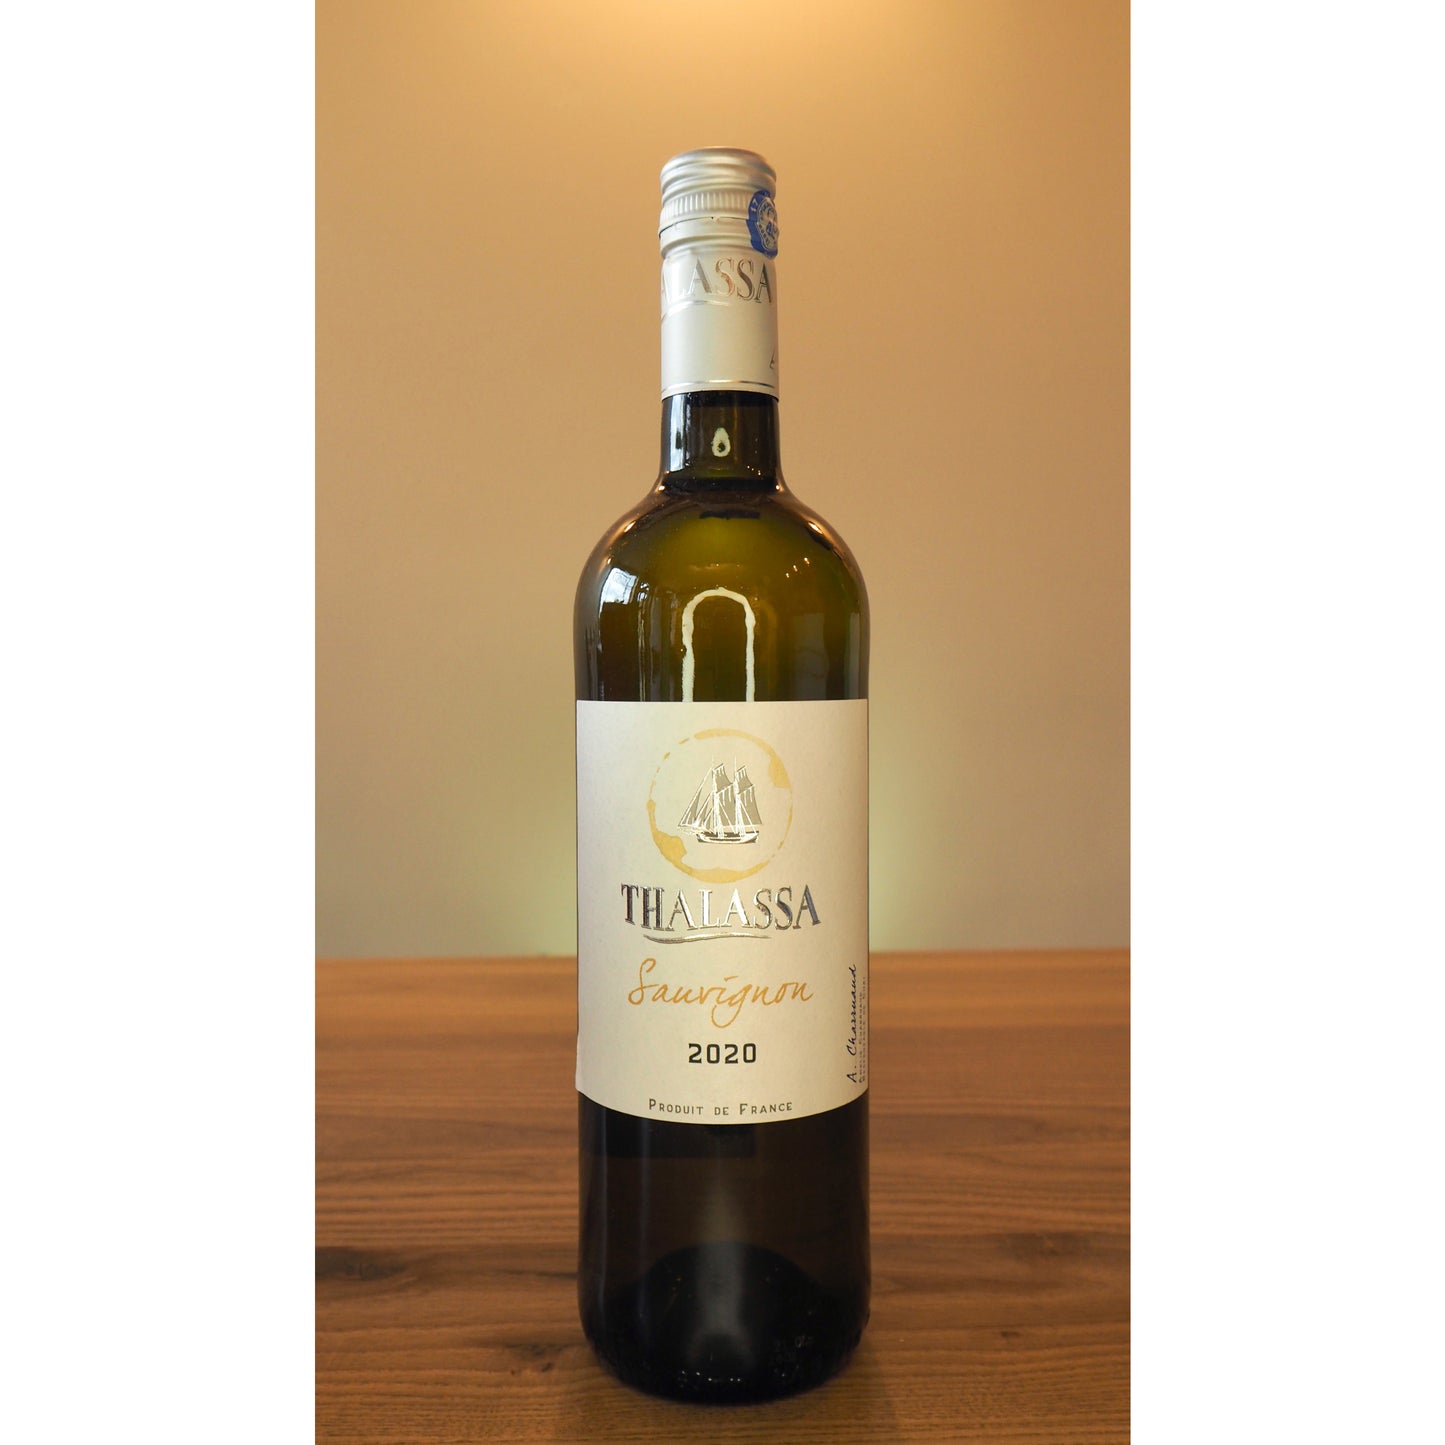 Thalassa Sauvignon 0,75L - La petite France Vilnius - White wine